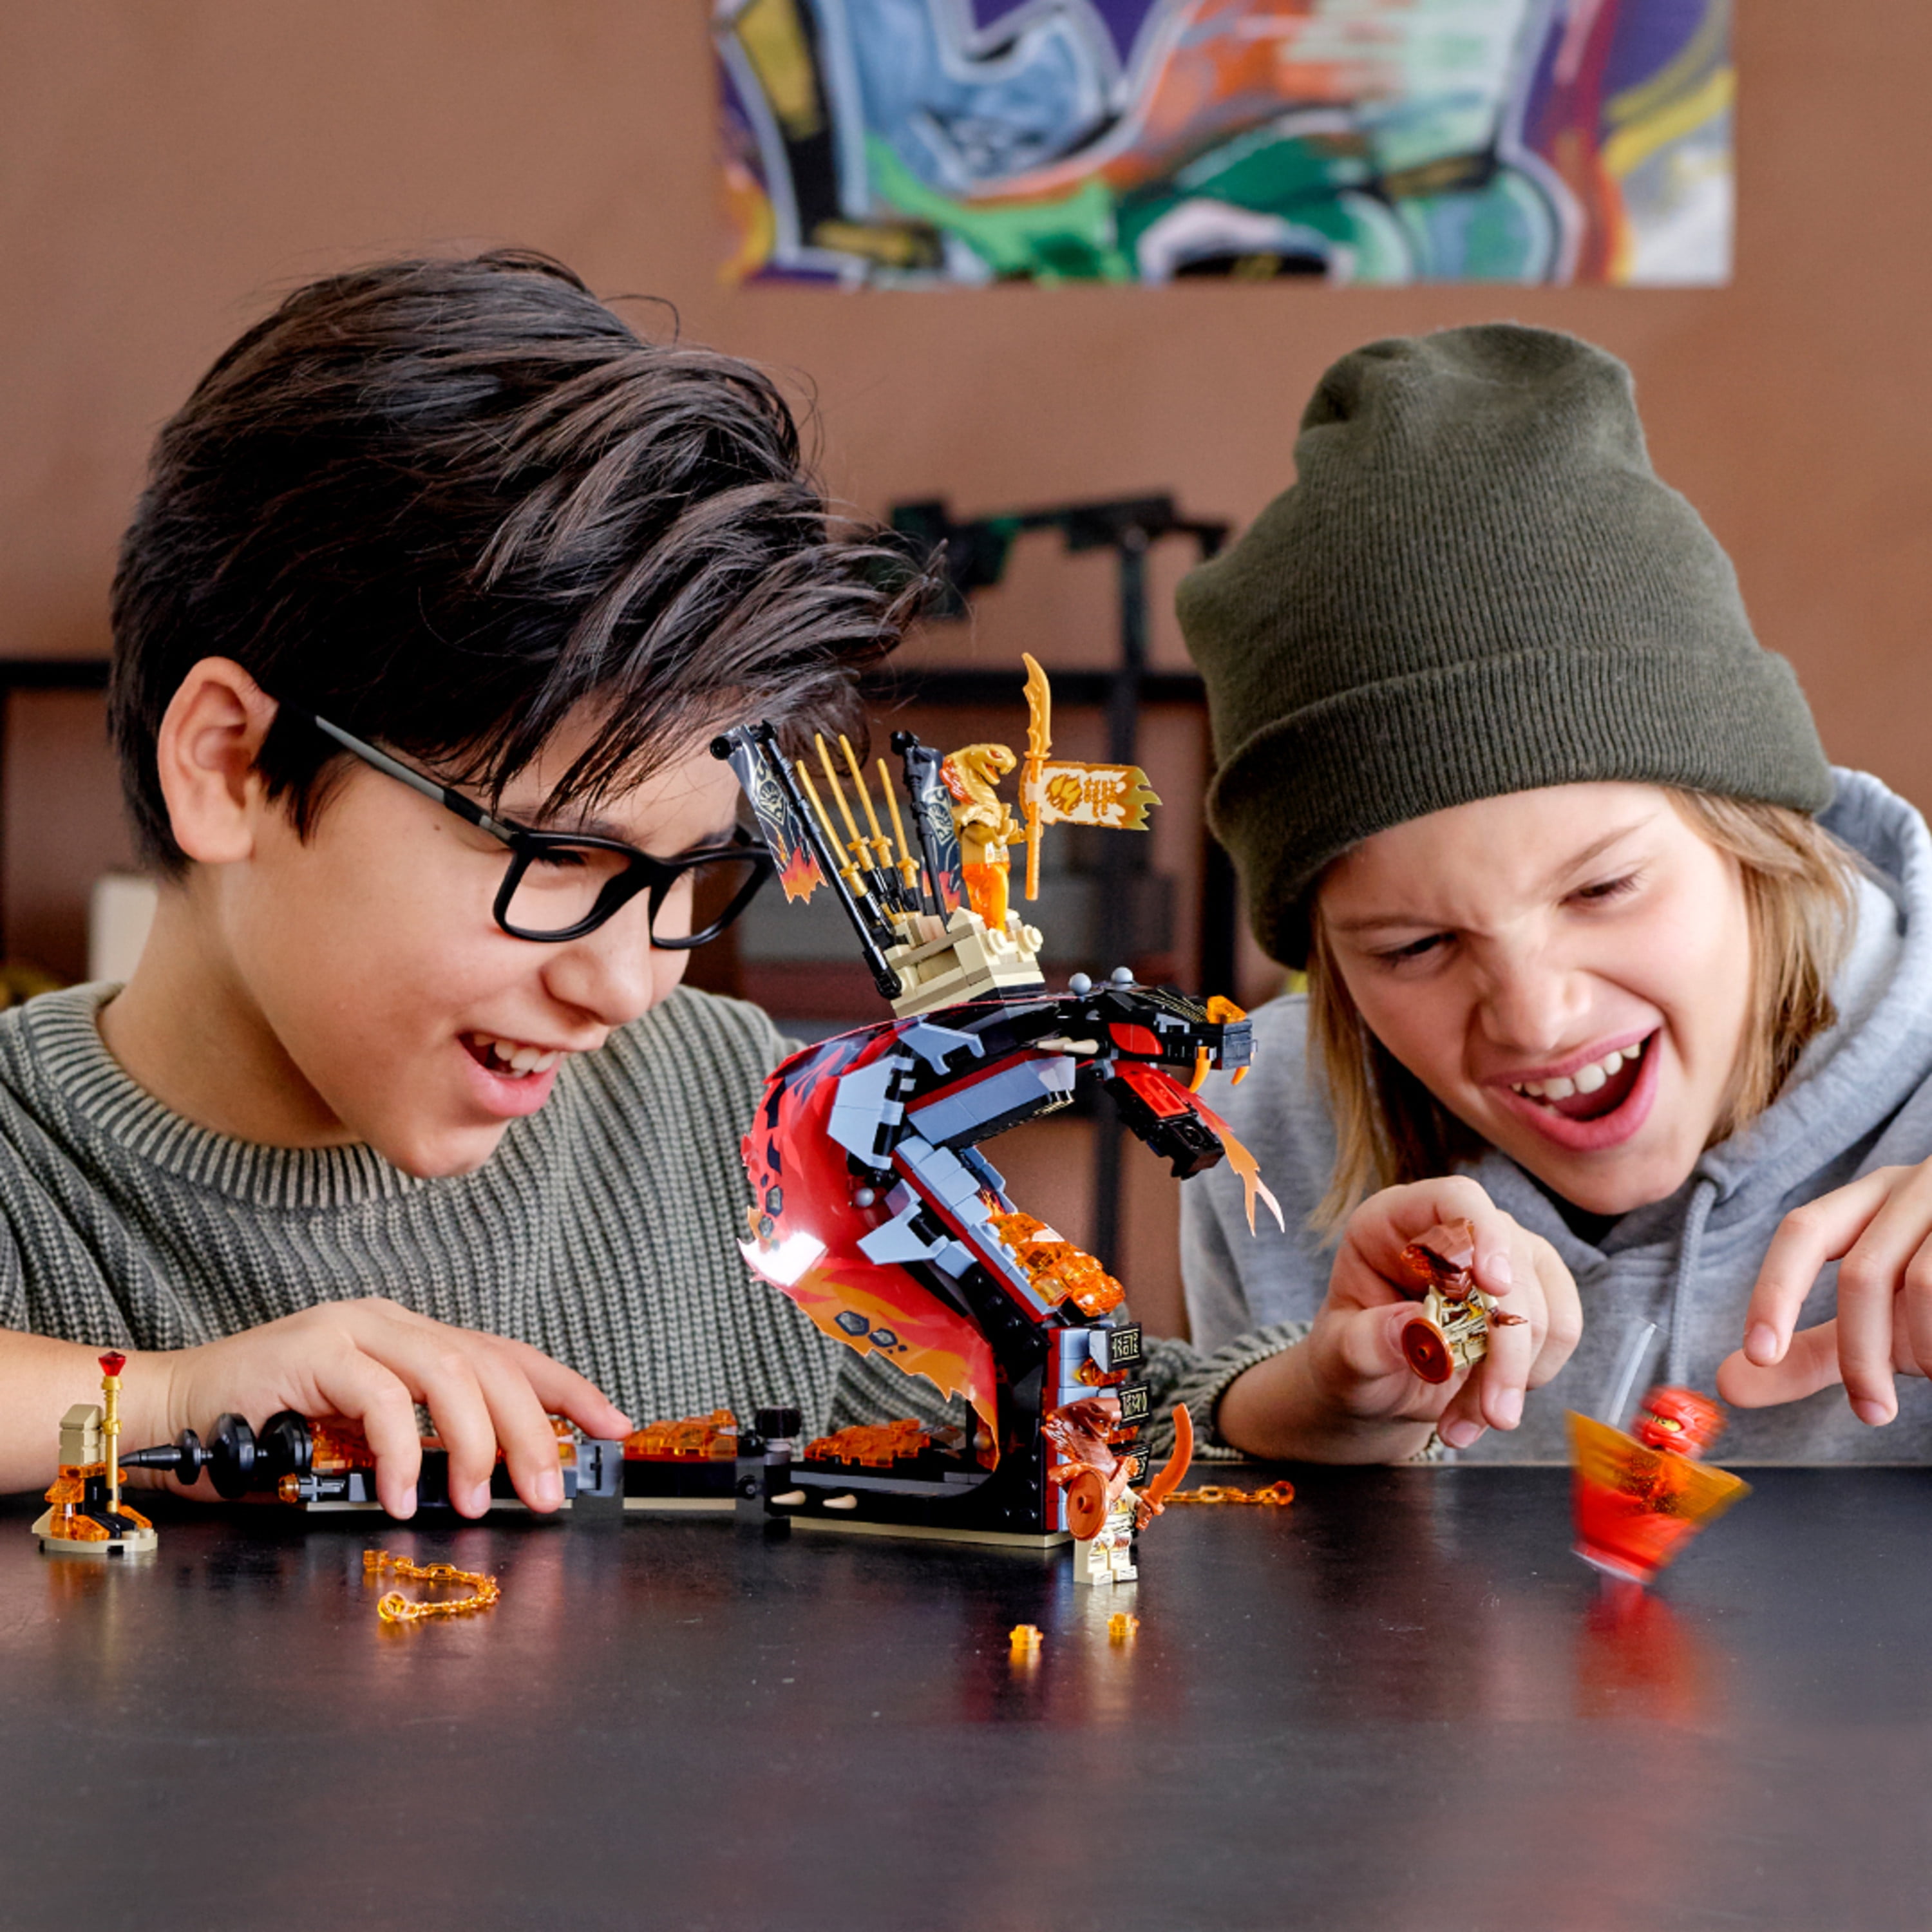 LEGO NINJAGO Fang 70674 Snake Building Toy for Kids with Ninja Minifigures (463 pieces) - Walmart.com